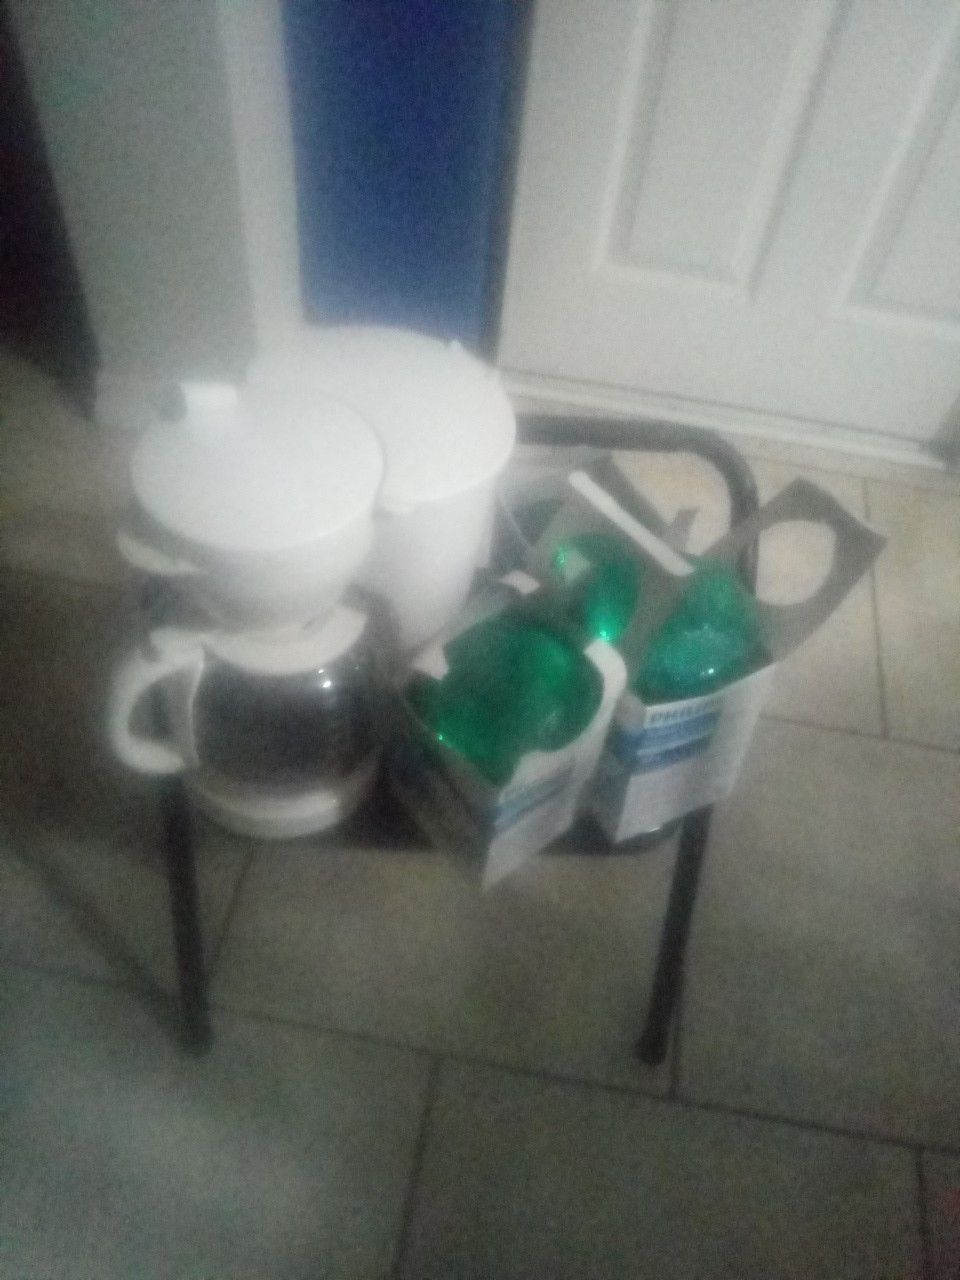 Three bulbs one stool and one coffee pot